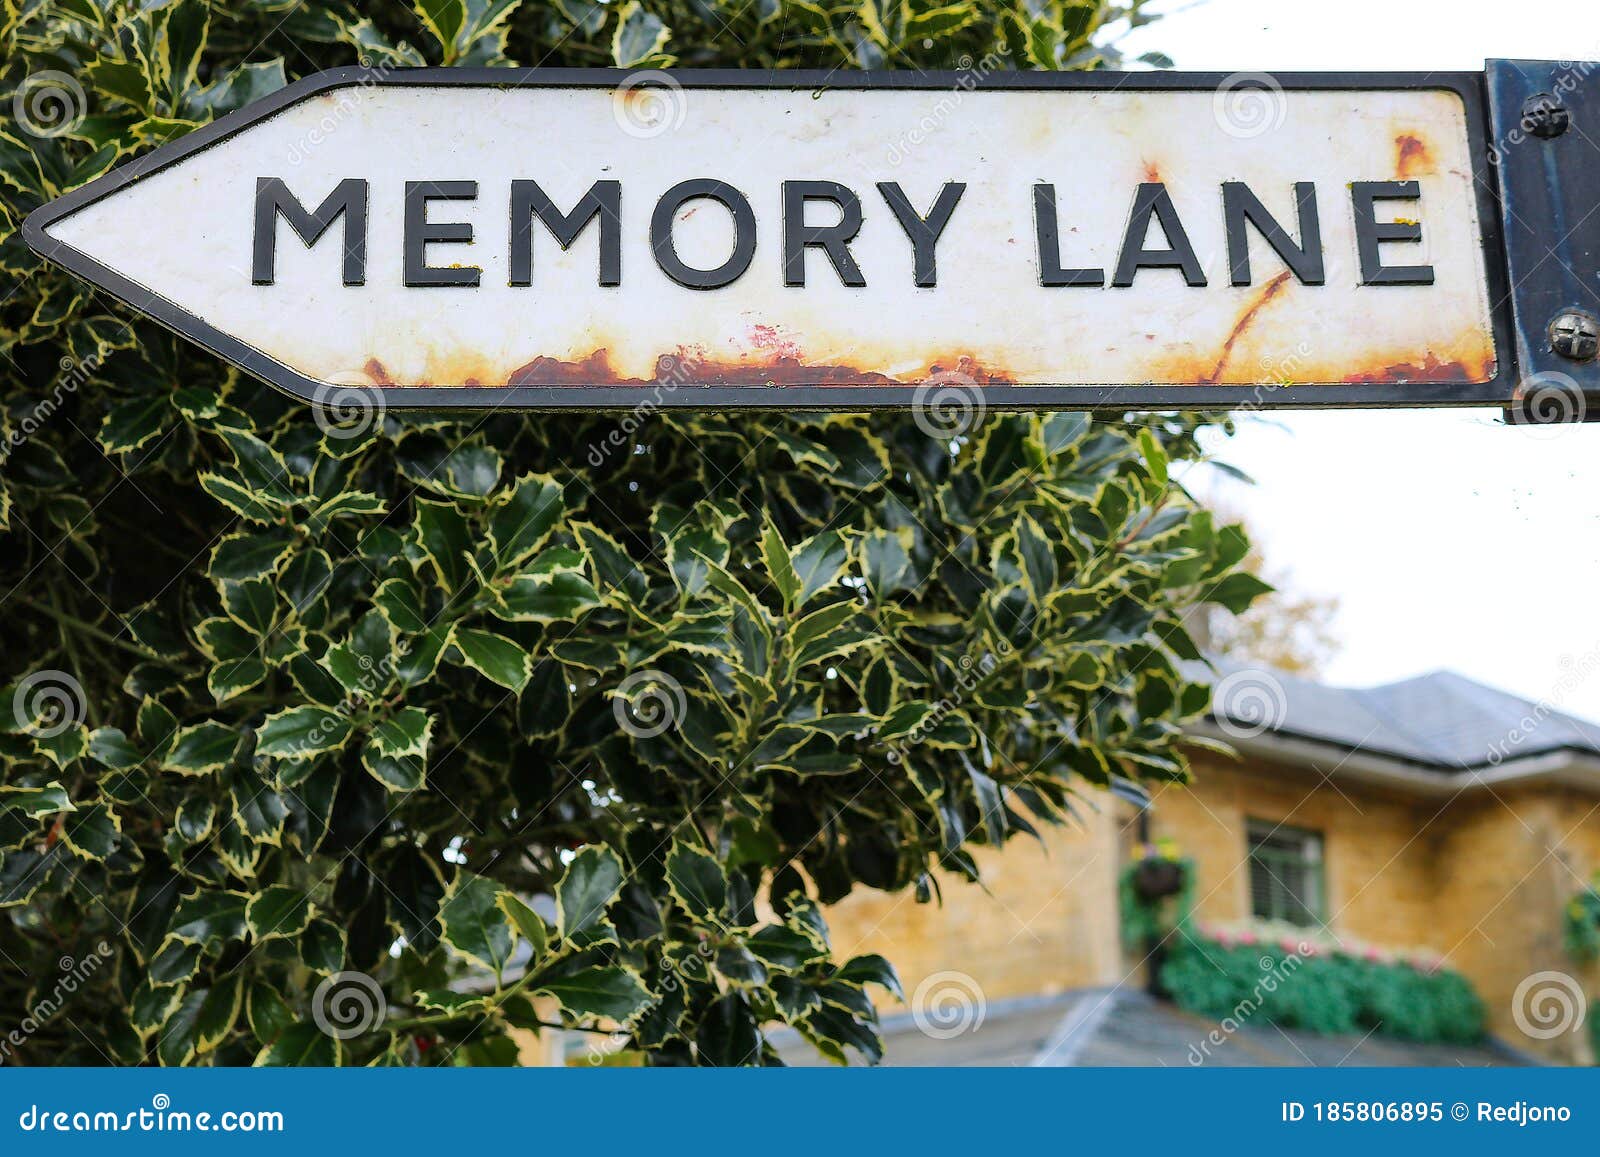 take a trip down memory lane meaning in english